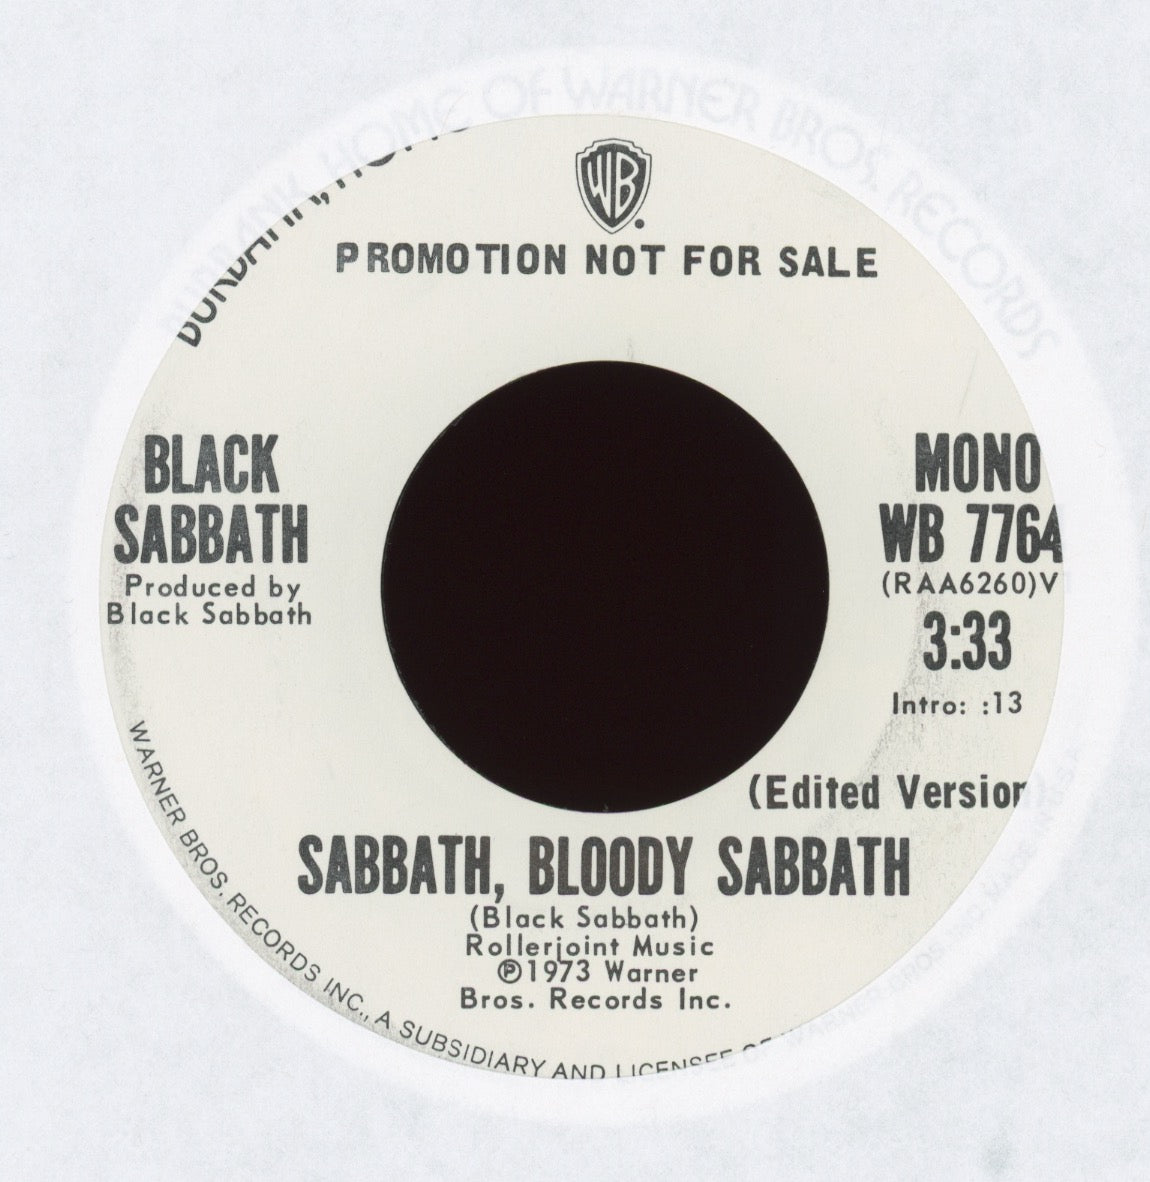 Black Sabbath - Sabbath, Bloody Sabbath on WB Promo Rock 45